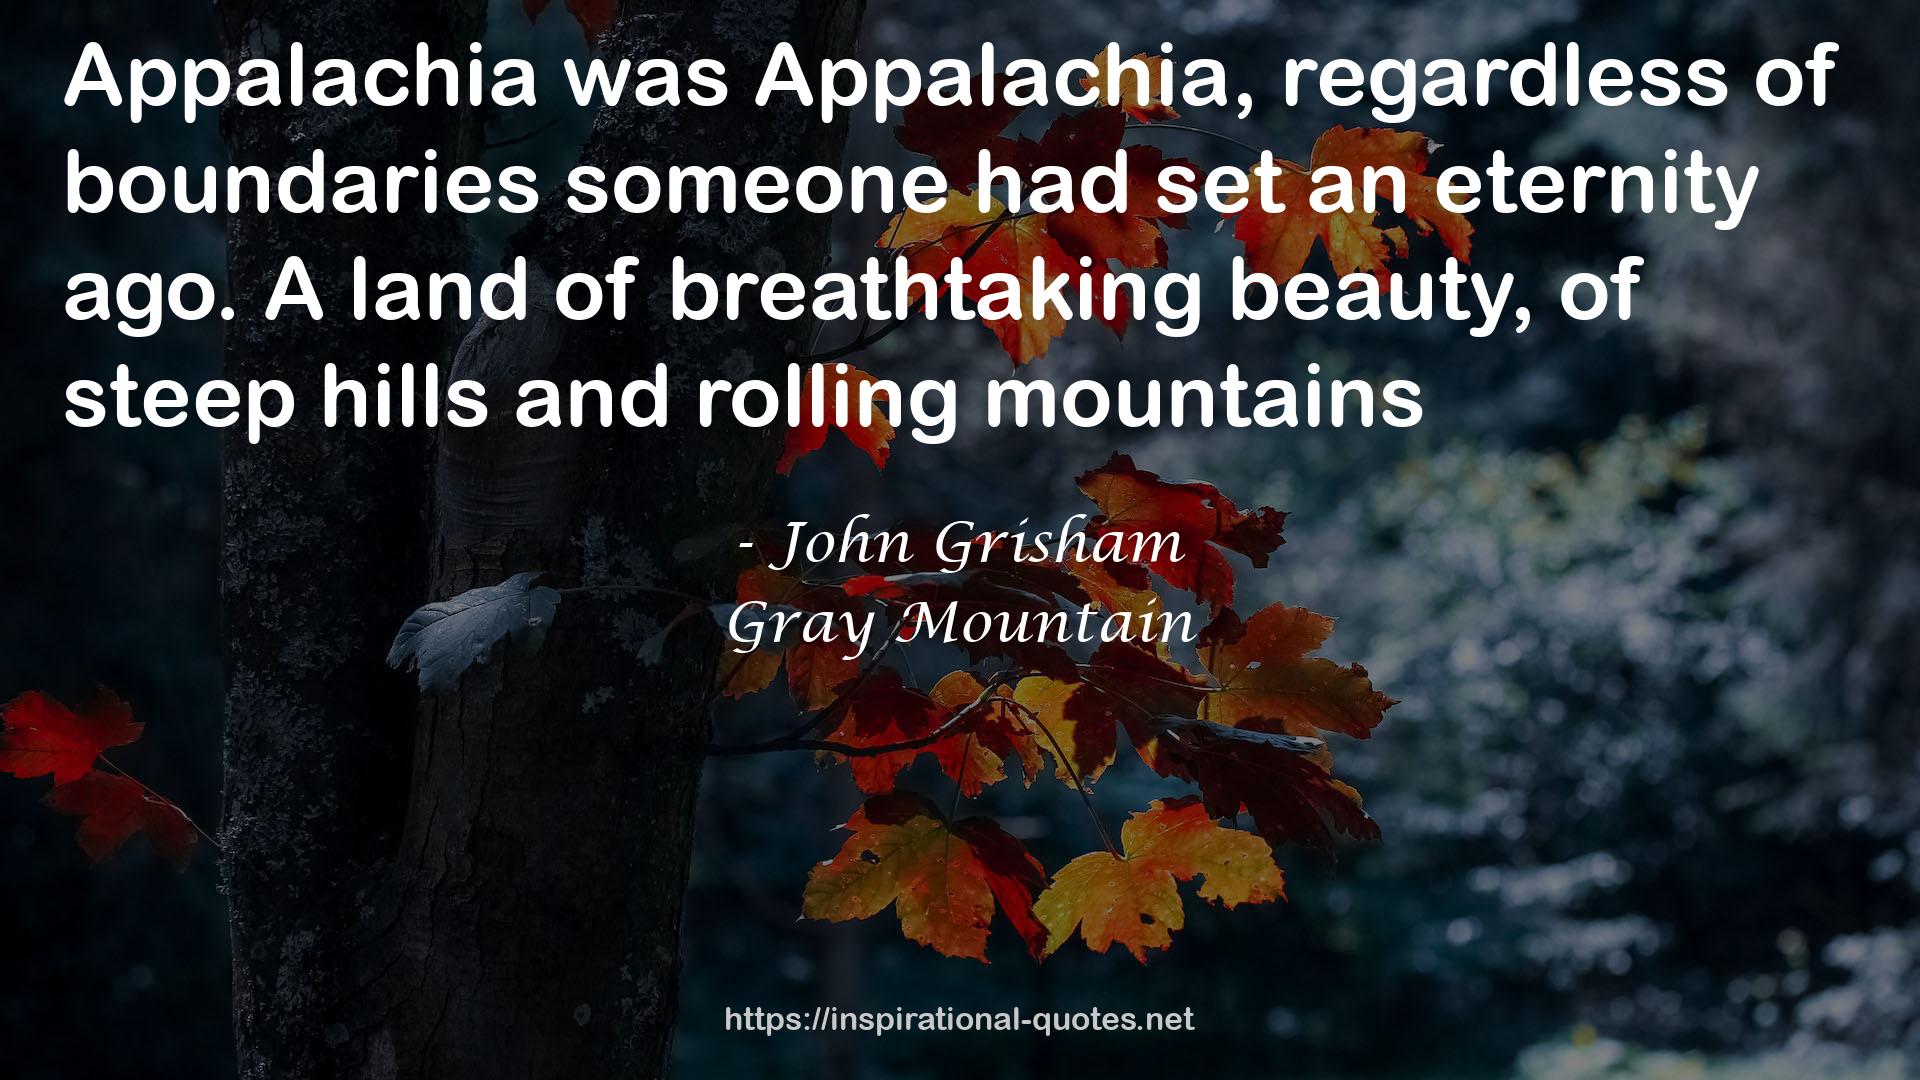 Gray Mountain QUOTES